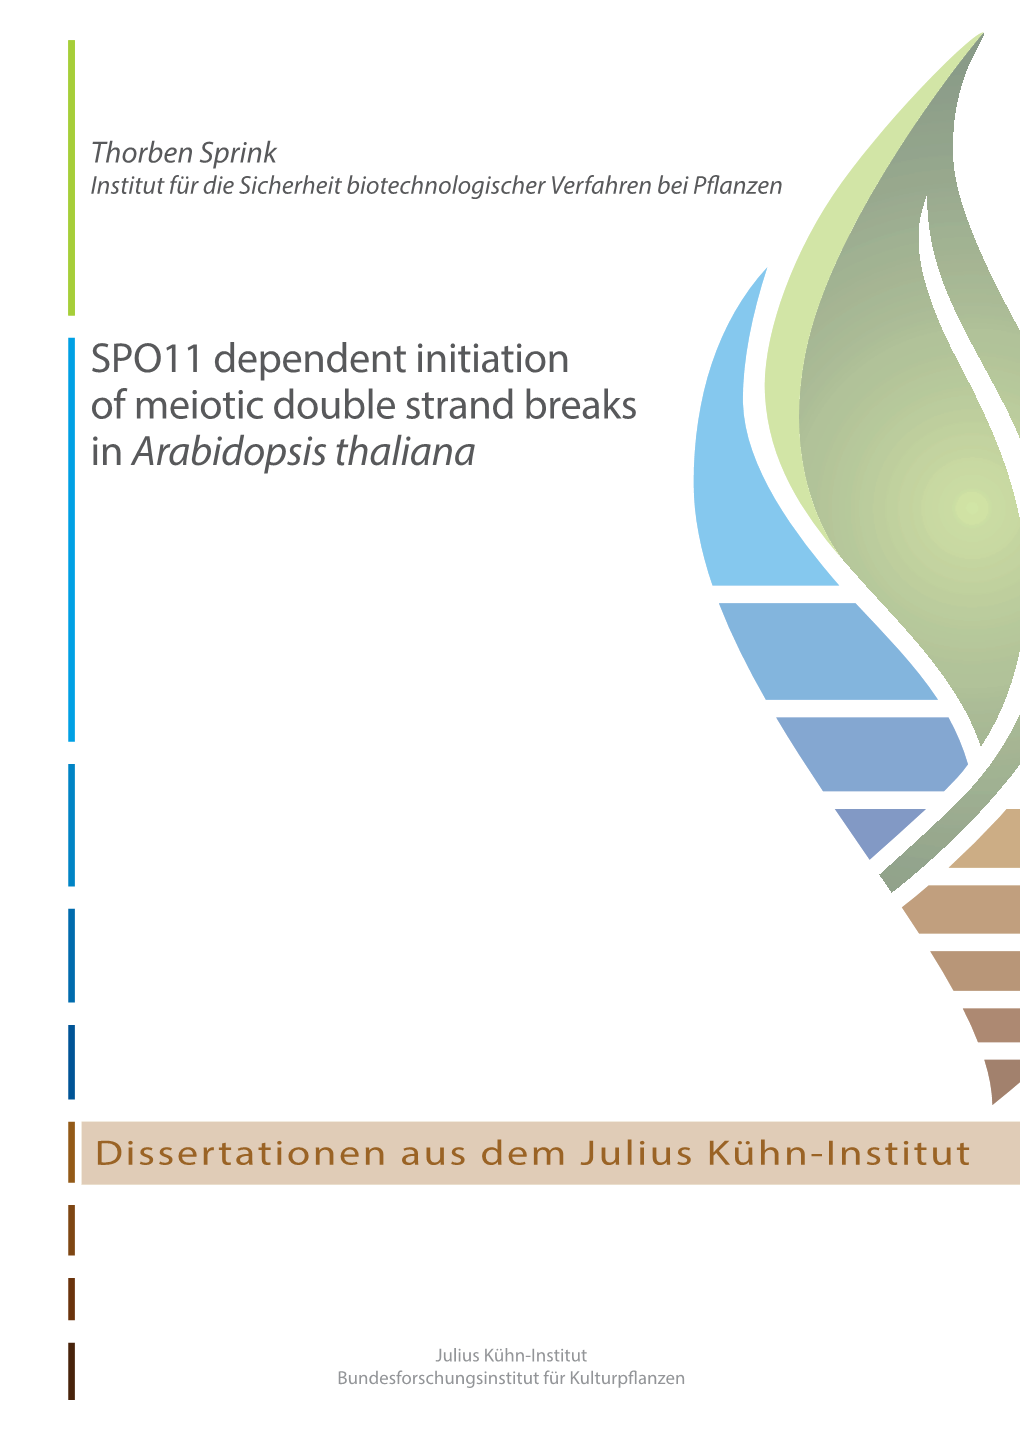 SPO11 Dependent Initiation of Meiotic Double Strand Breaks in Arabidopsis Thaliana